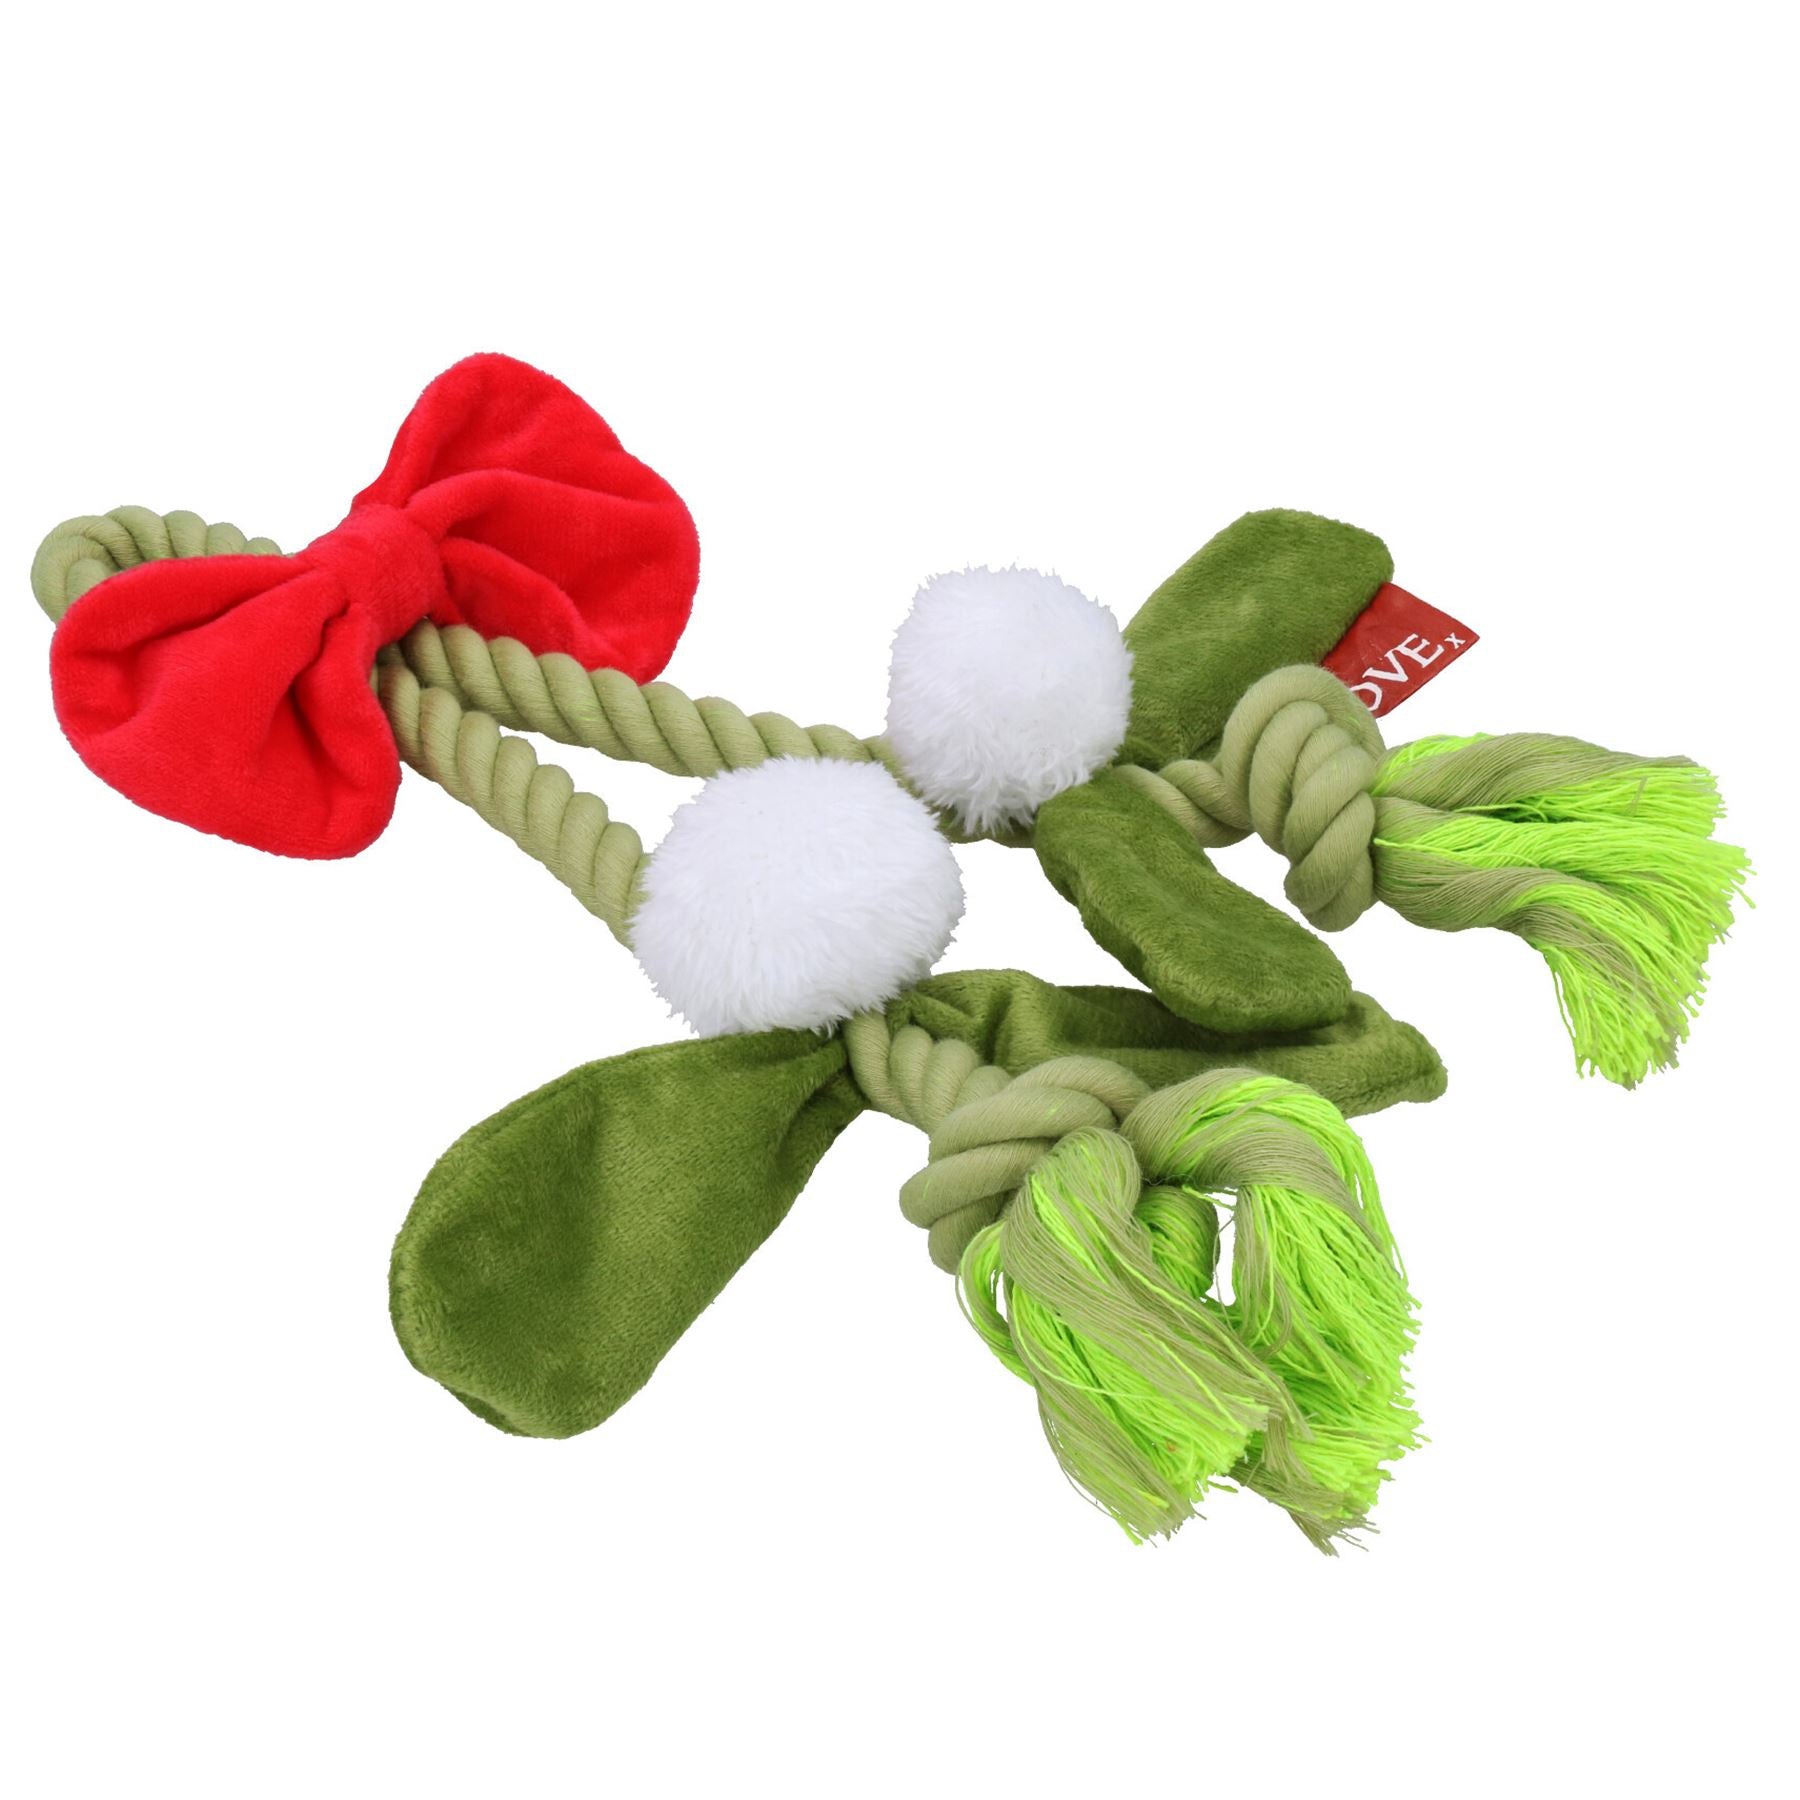 Dog Christmas Gift Mistle-Bow Plush Rope Play Toy Festive Xmas Present